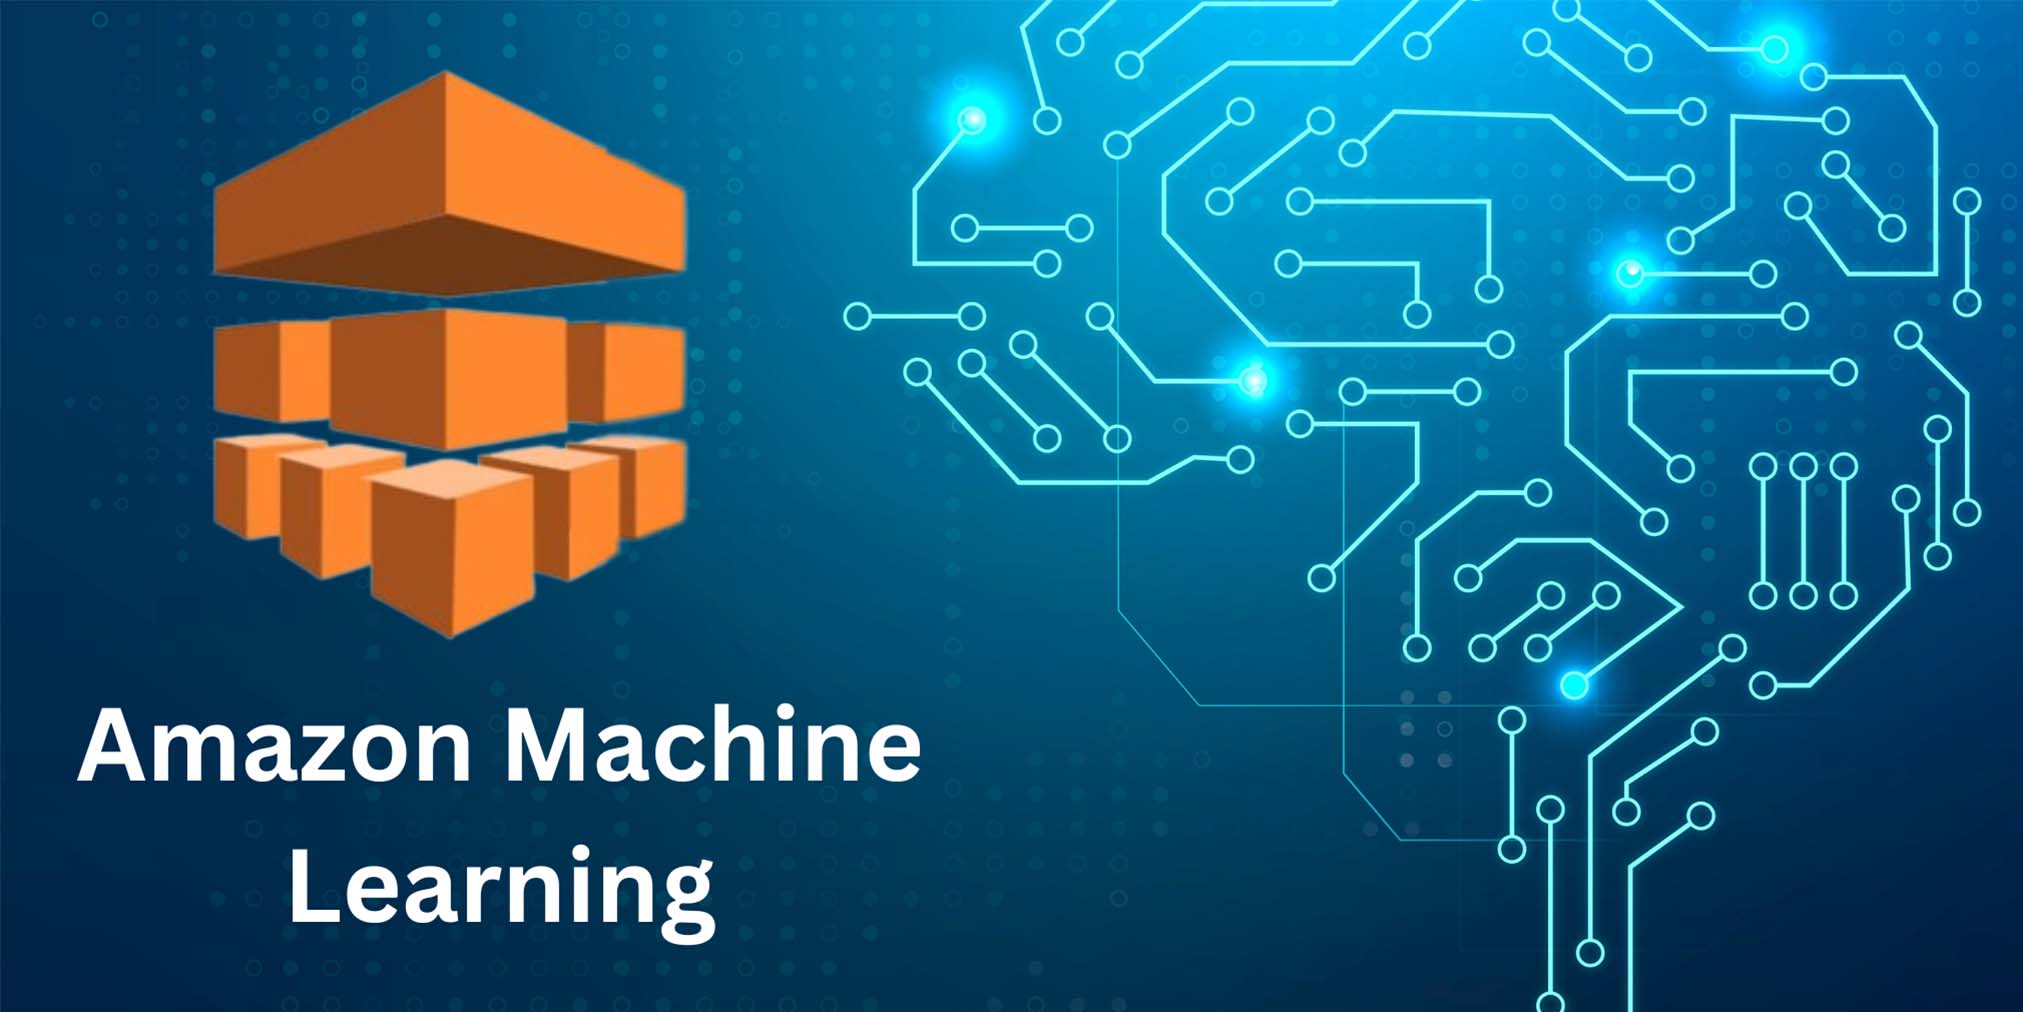 Amazon-Machine-Learning-Predictive-Modelling-Tools